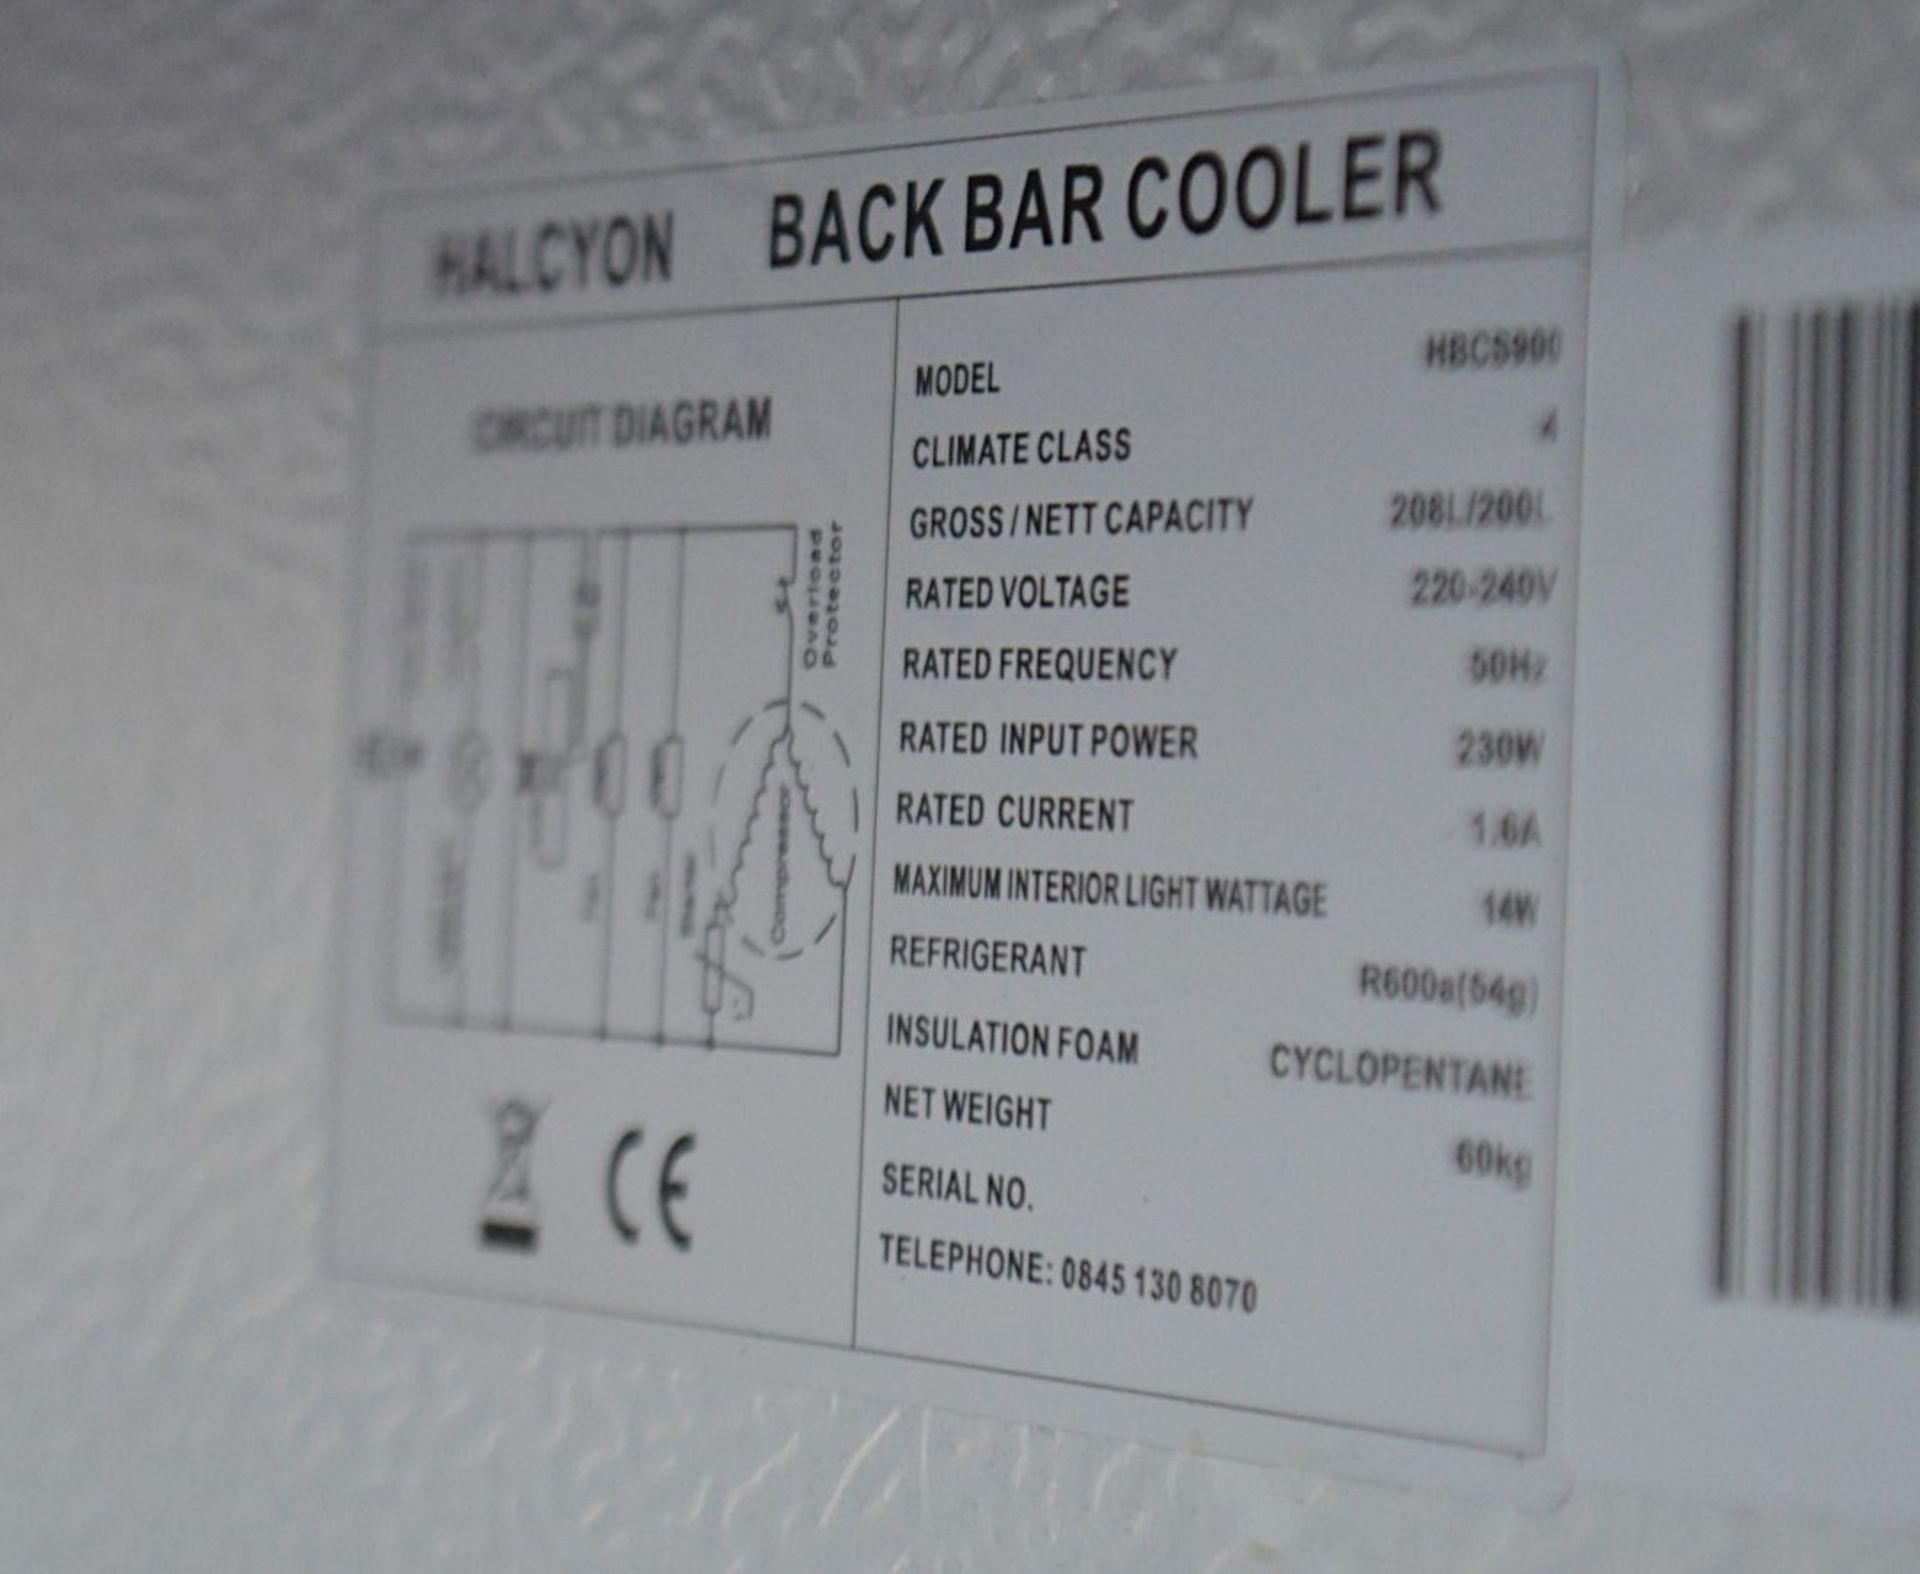 1 x HALCYON Commercial Sliding 2-Door Back Bar Cooler - Model: HBCS900 - Original RRP £720.00 - Image 7 of 8